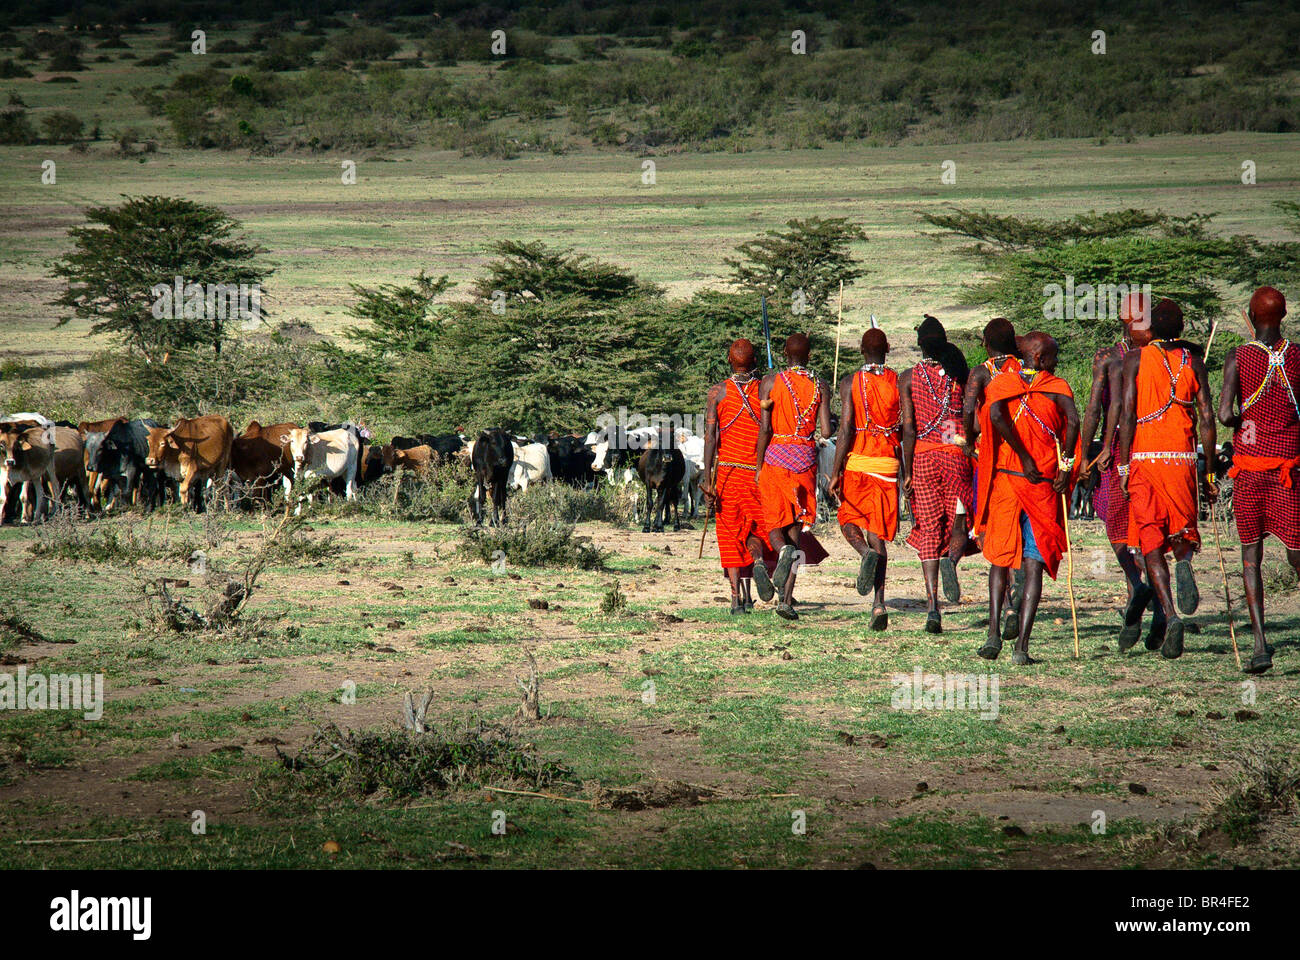 Masai men with cattle, Masai Mara, Kenya, Africa Stock Photo